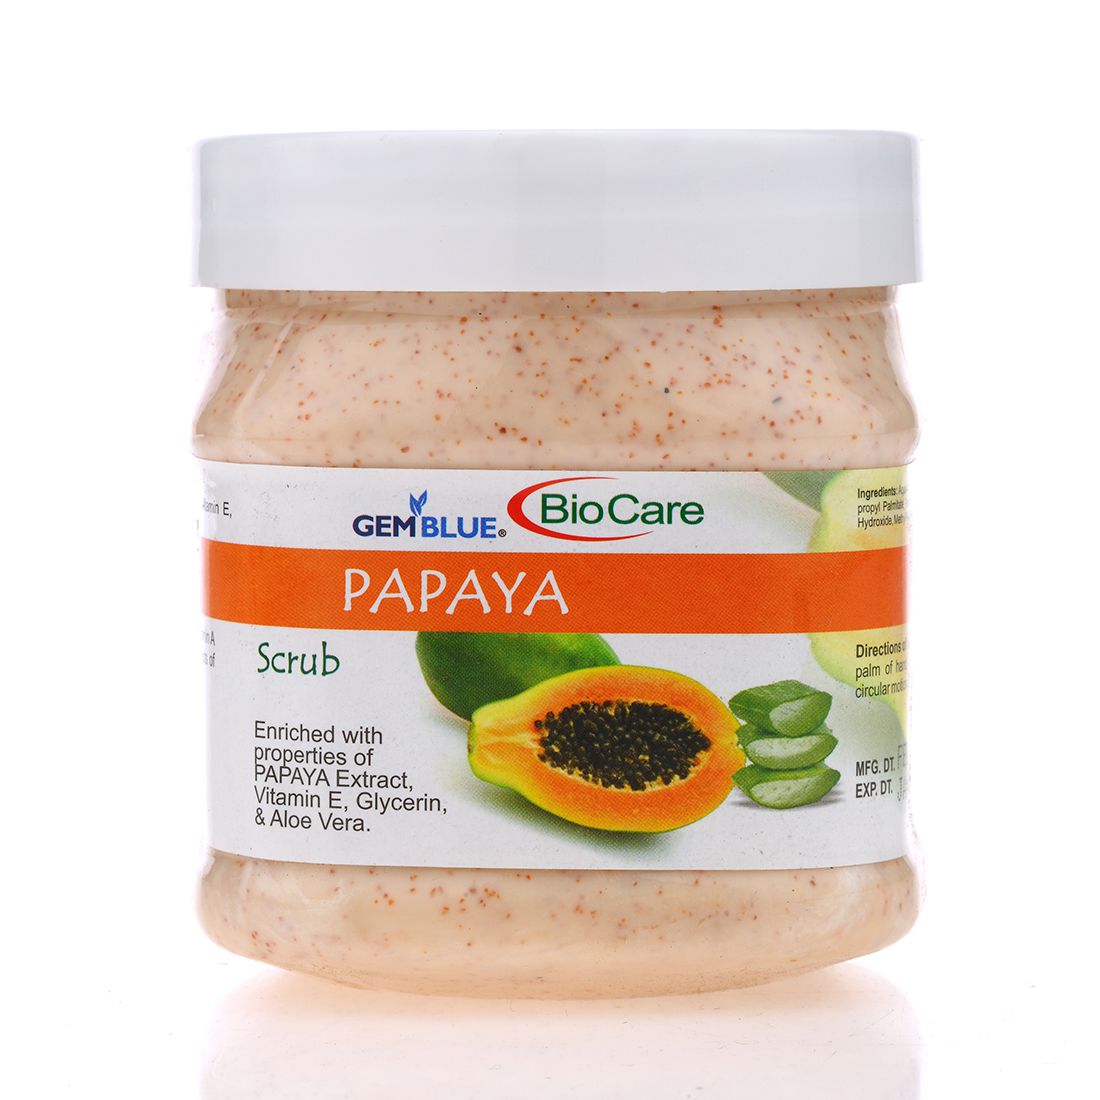     			gemblue biocare Exfoliating Papaya Scrub & Exfoliators 500 ml